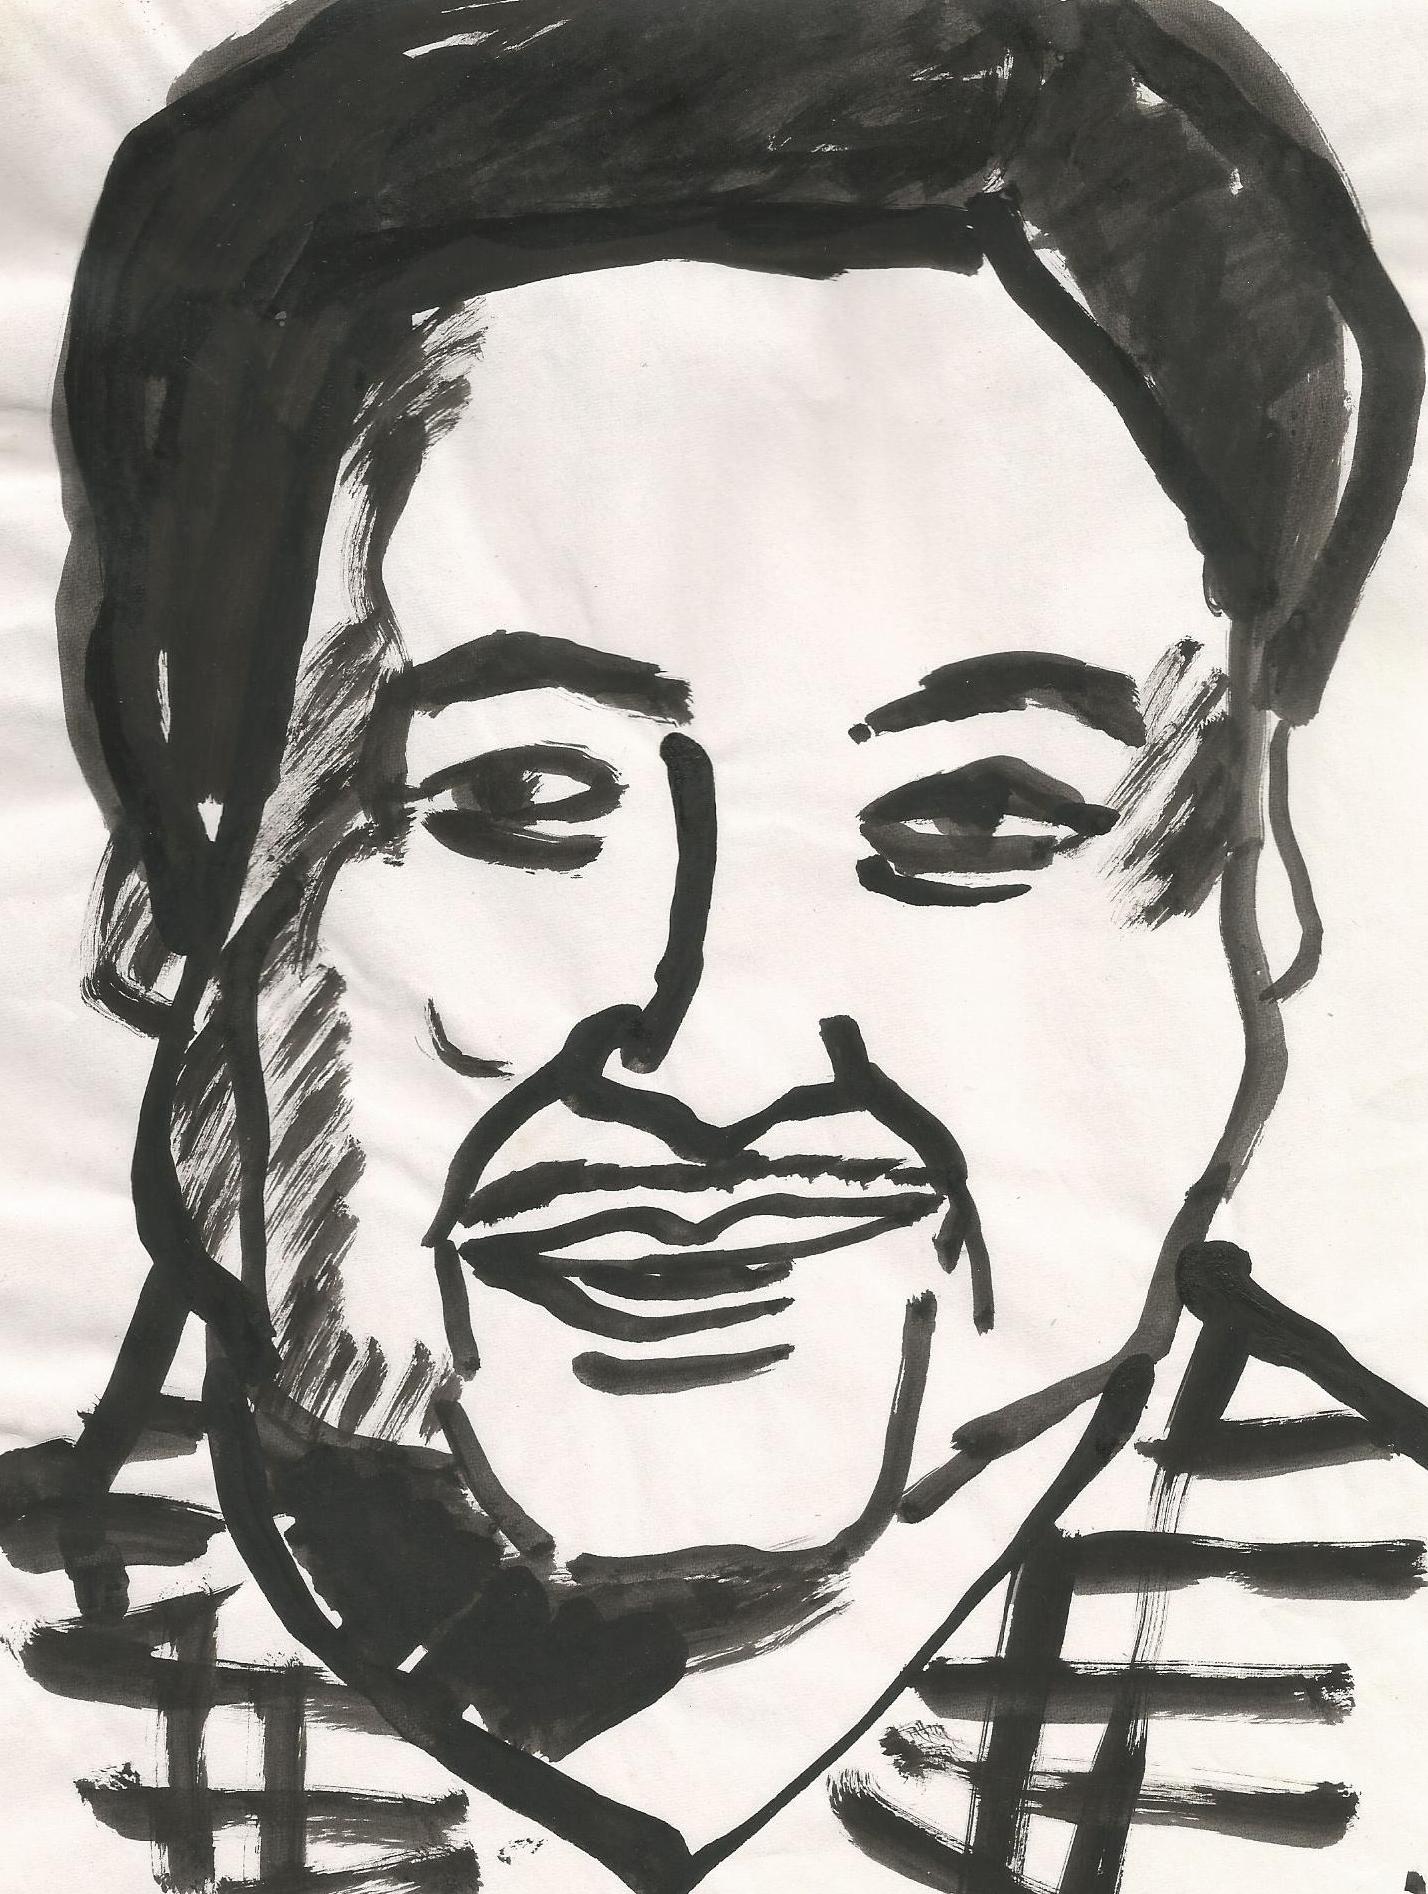 A sketch of Kishore Kumar